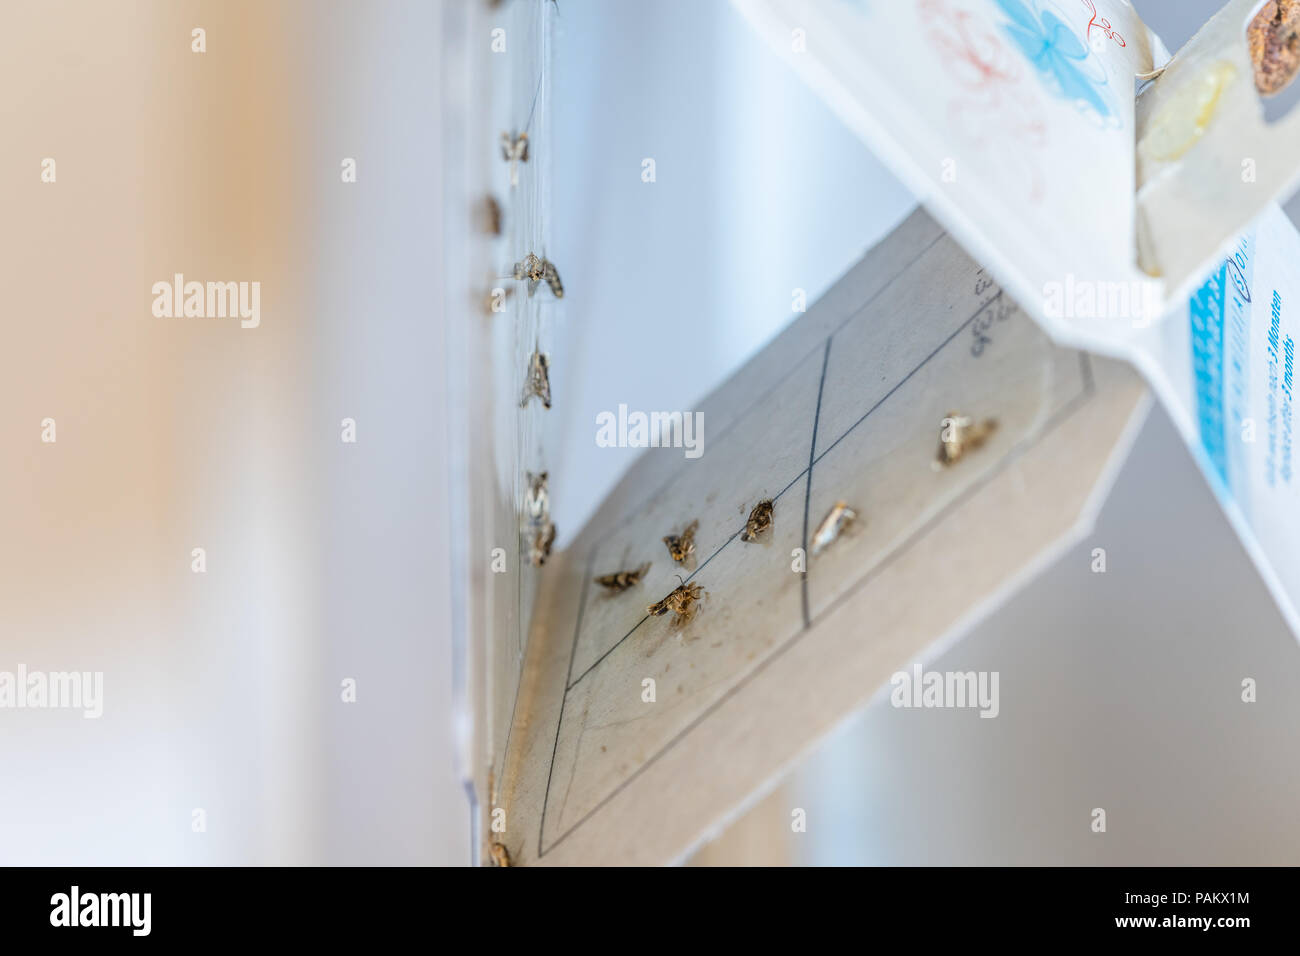 pheromone clothes moth trap Stock Photo - Alamy